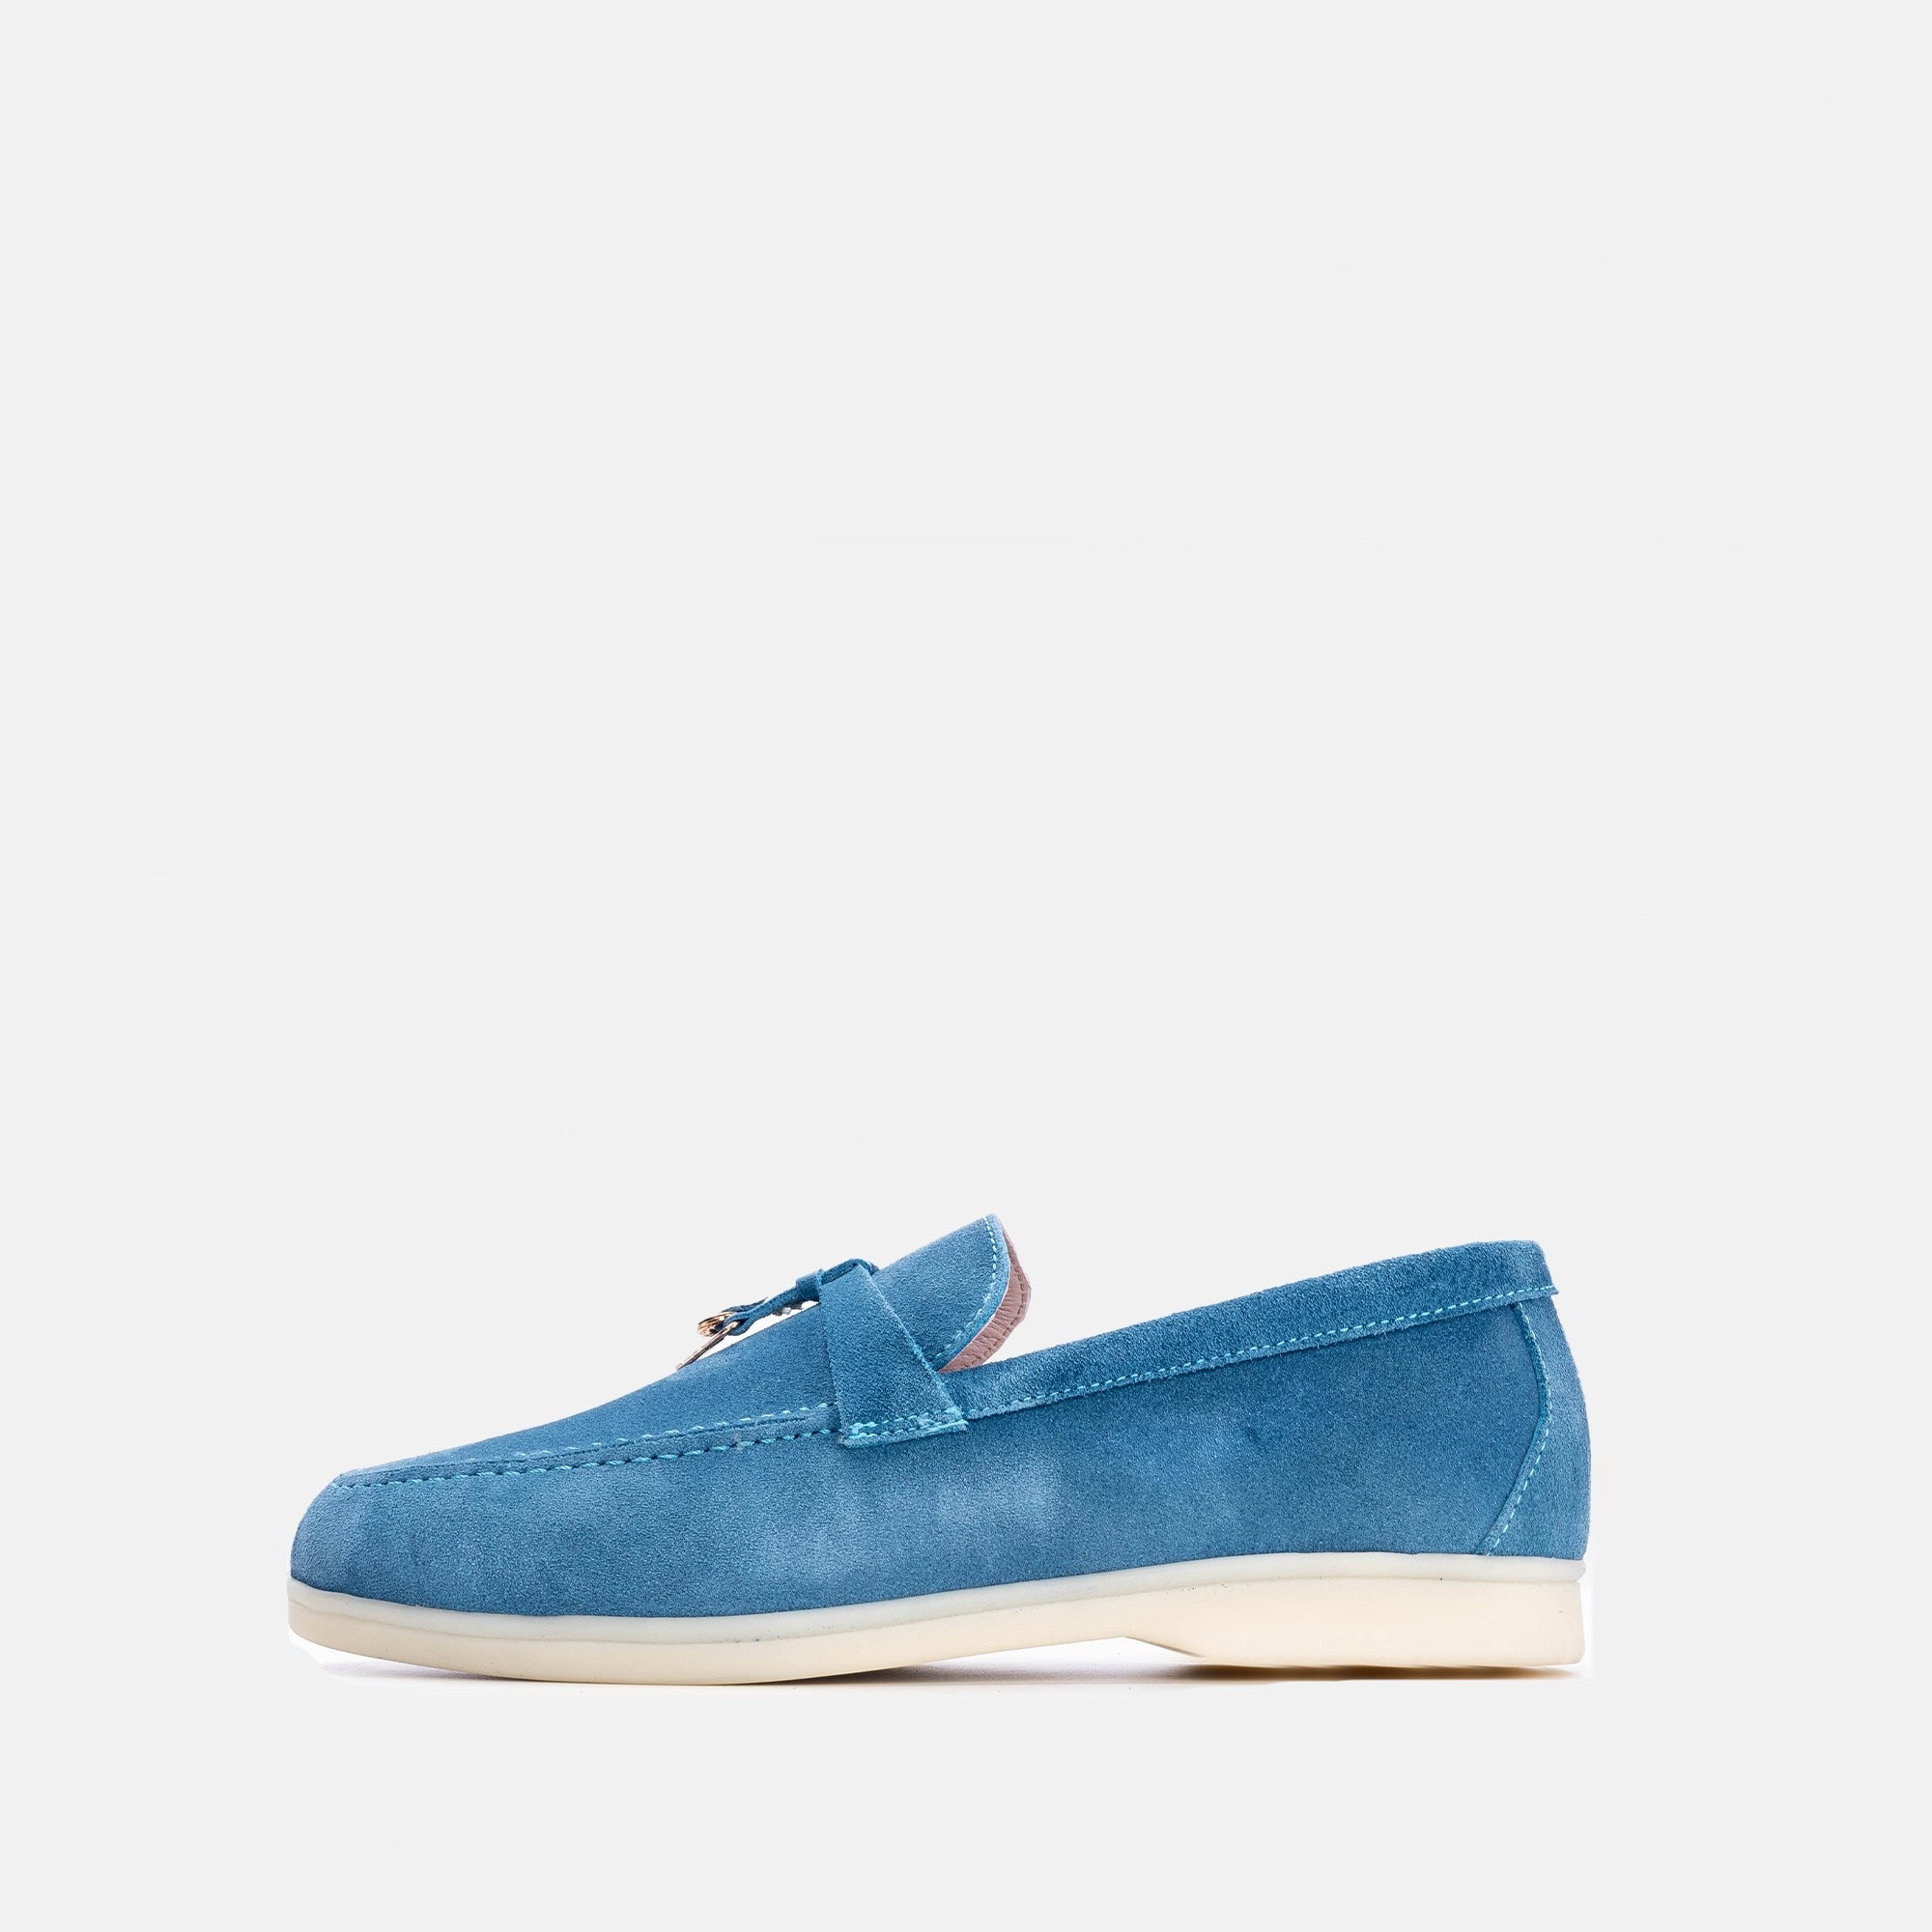 '''32 Chaussure en daim Bleu